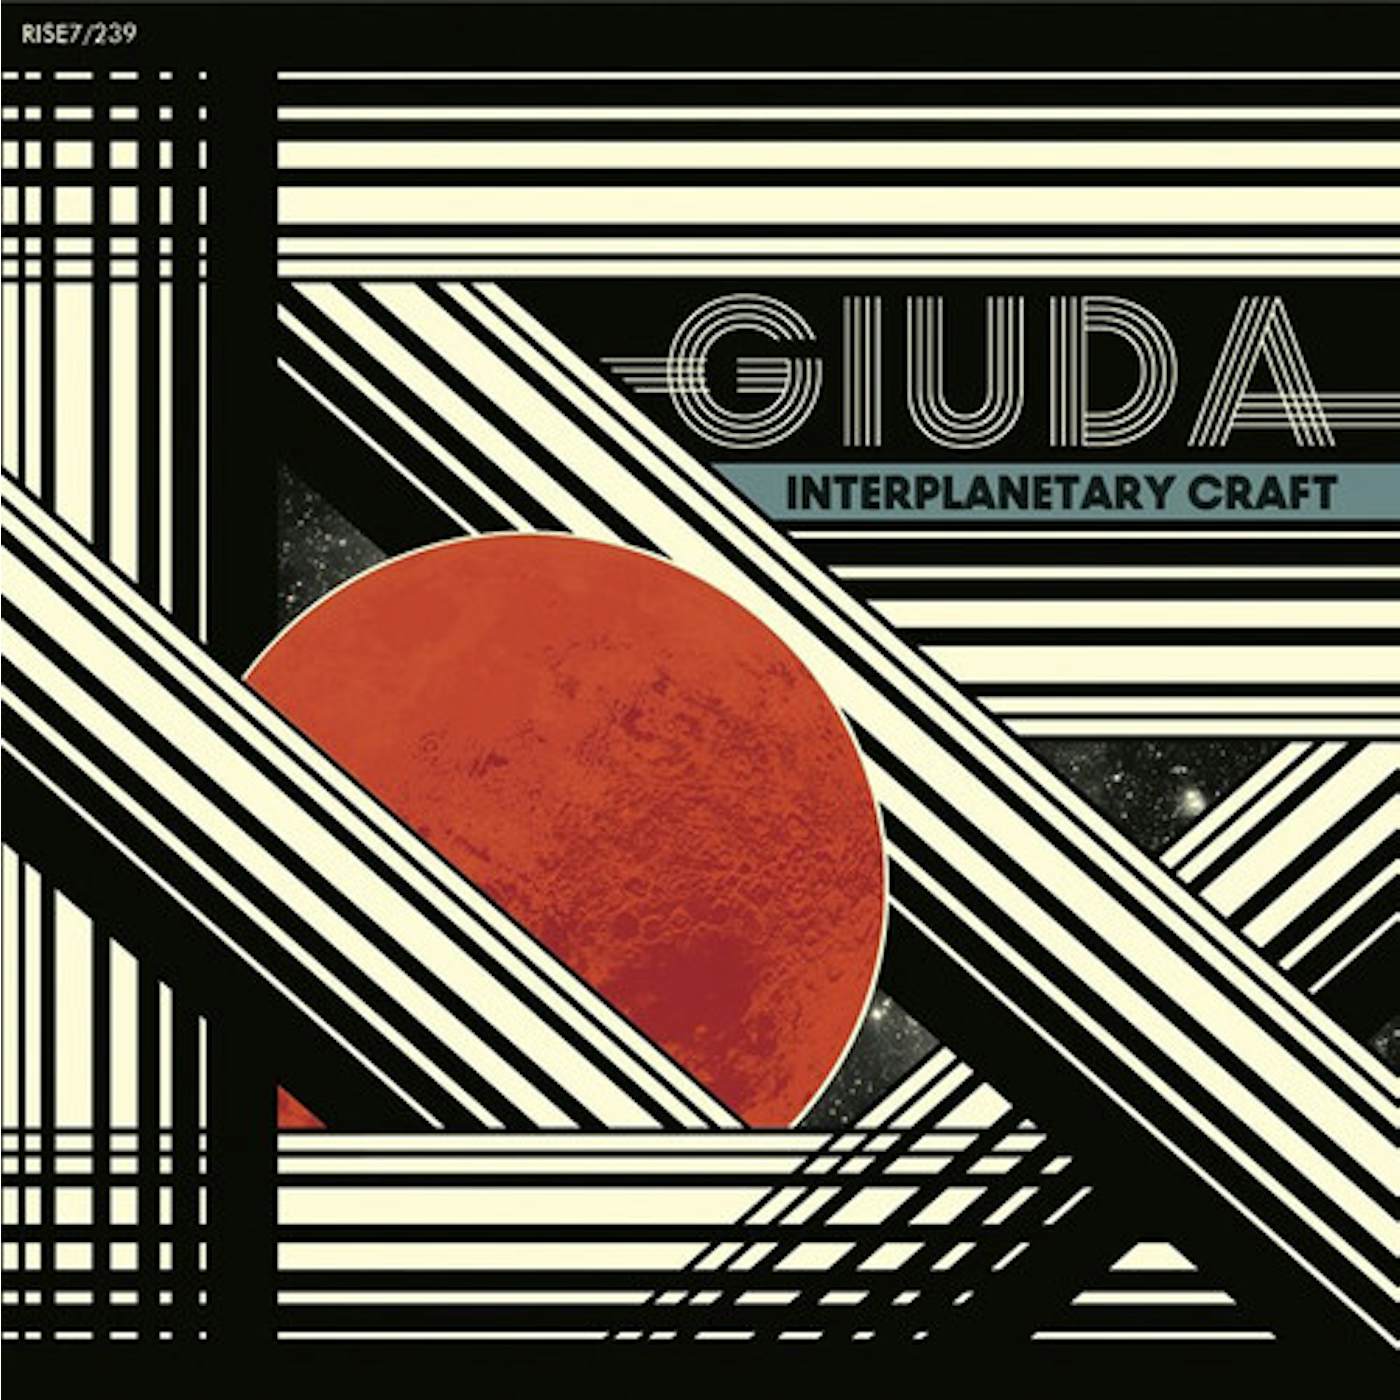 Giuda Interplanetary Craft Vinyl Record